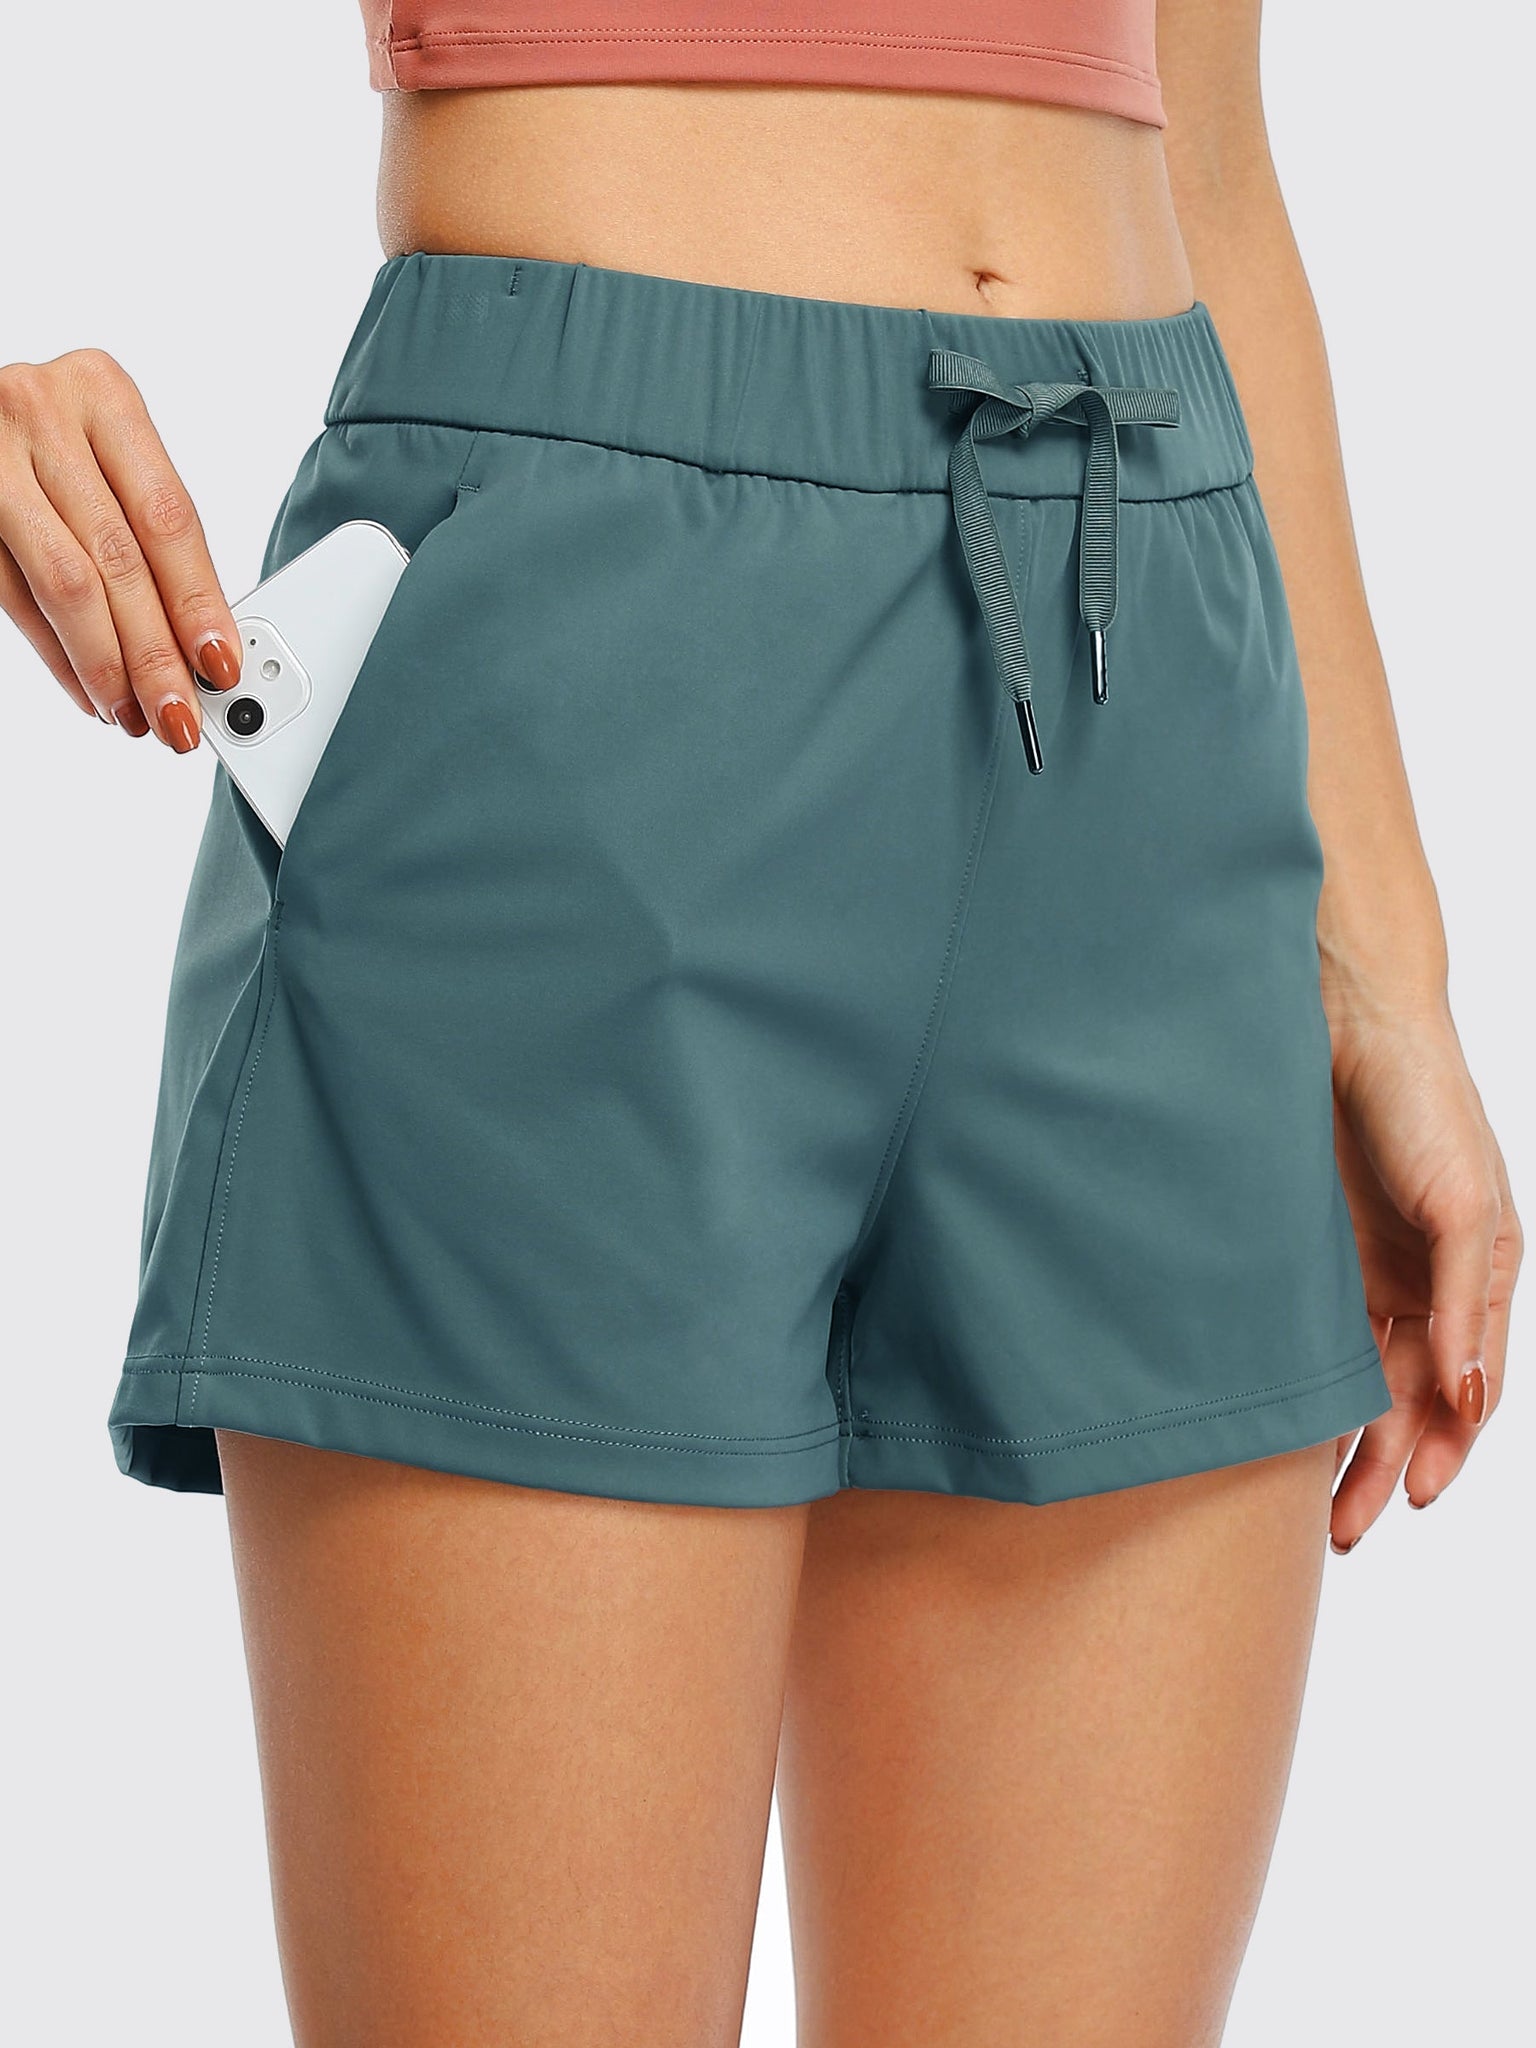 Willit Women's Summer 2.5 Inch Shorts_Mallard Green1